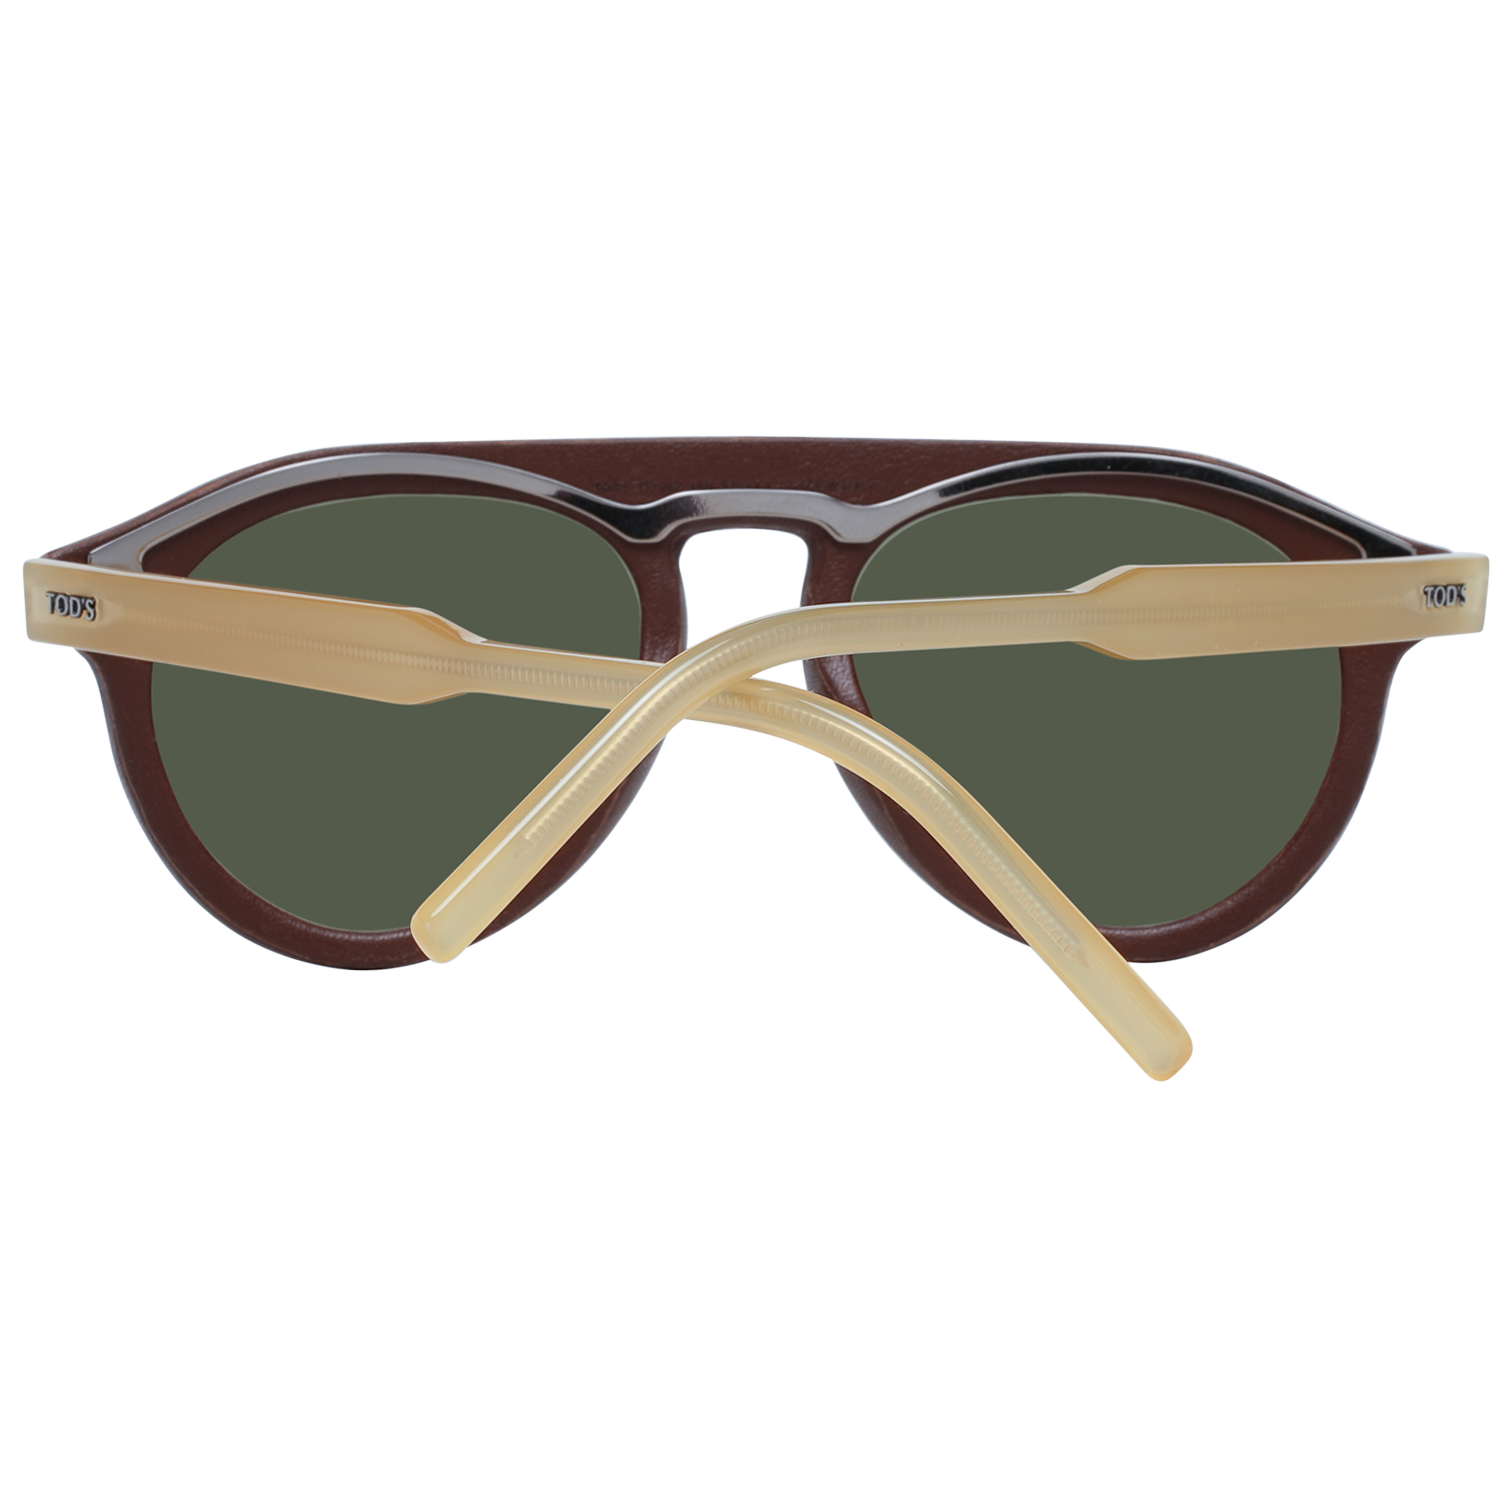 Tods Sunglasses Tods Sunglasses TO0262 48N 52 Eyeglasses Eyewear UK USA Australia 